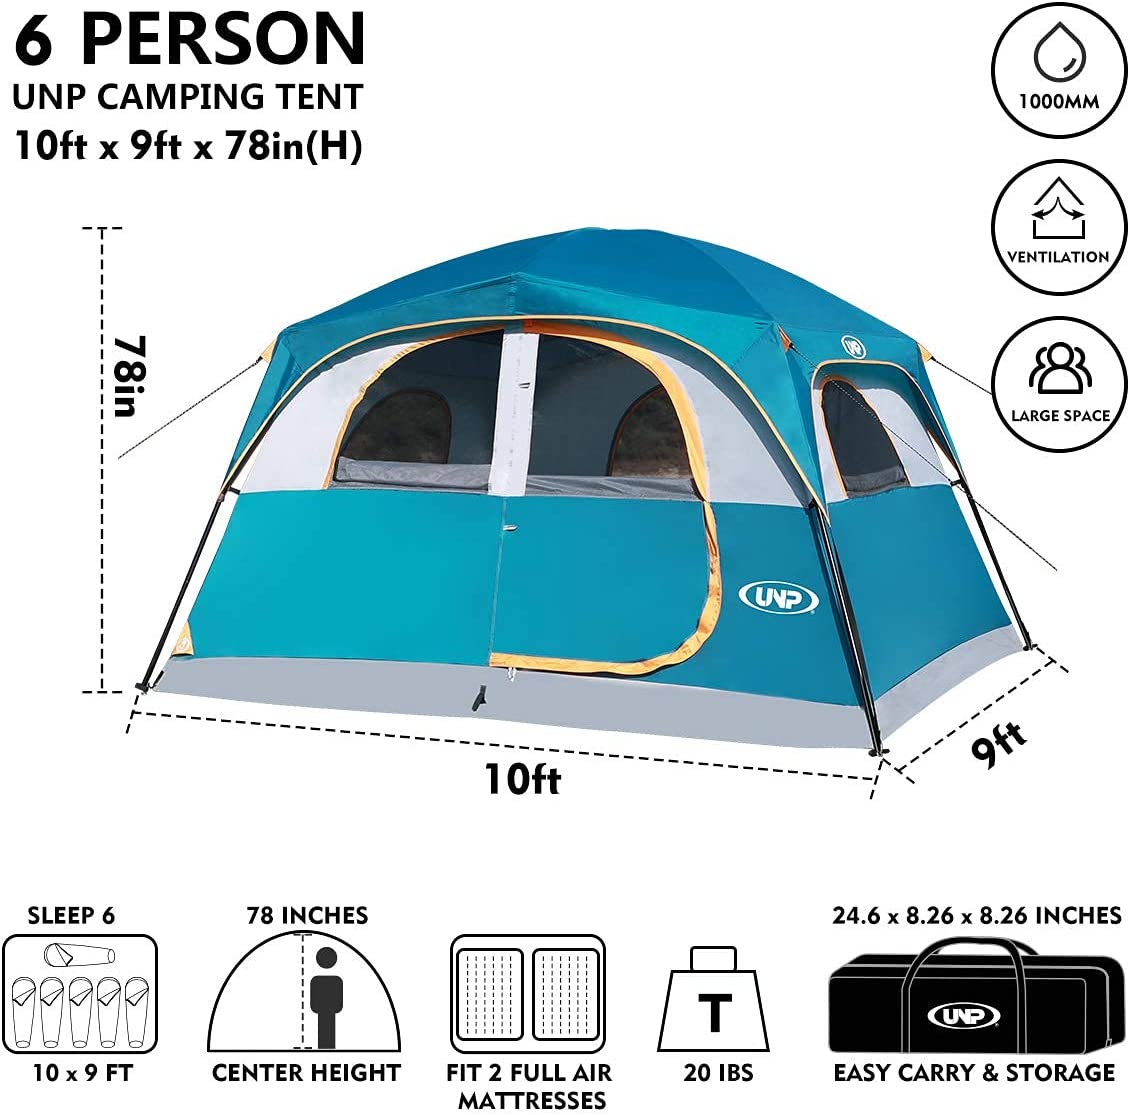 Unp Cabin Tent For 6 Features